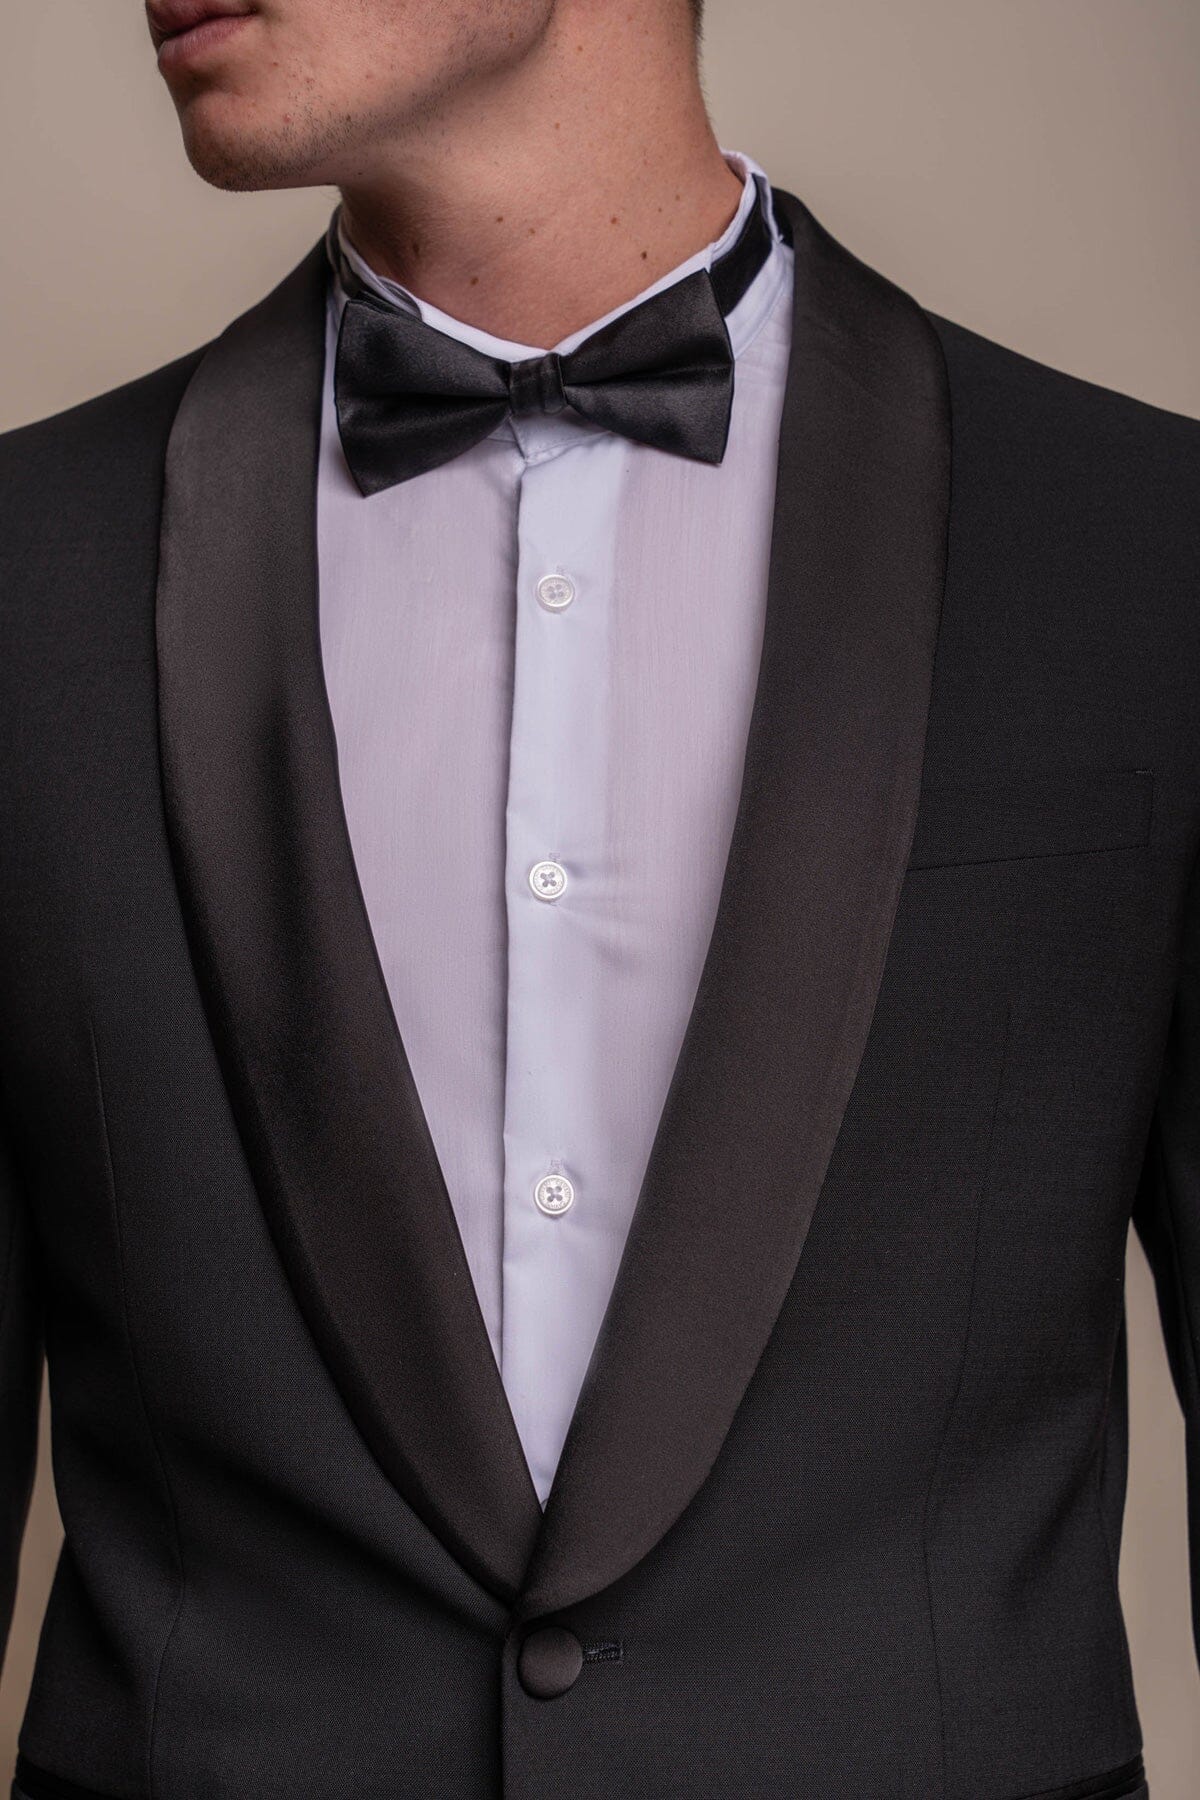 Aspen Black Tuxedo Suit Swatch - Swatch - 